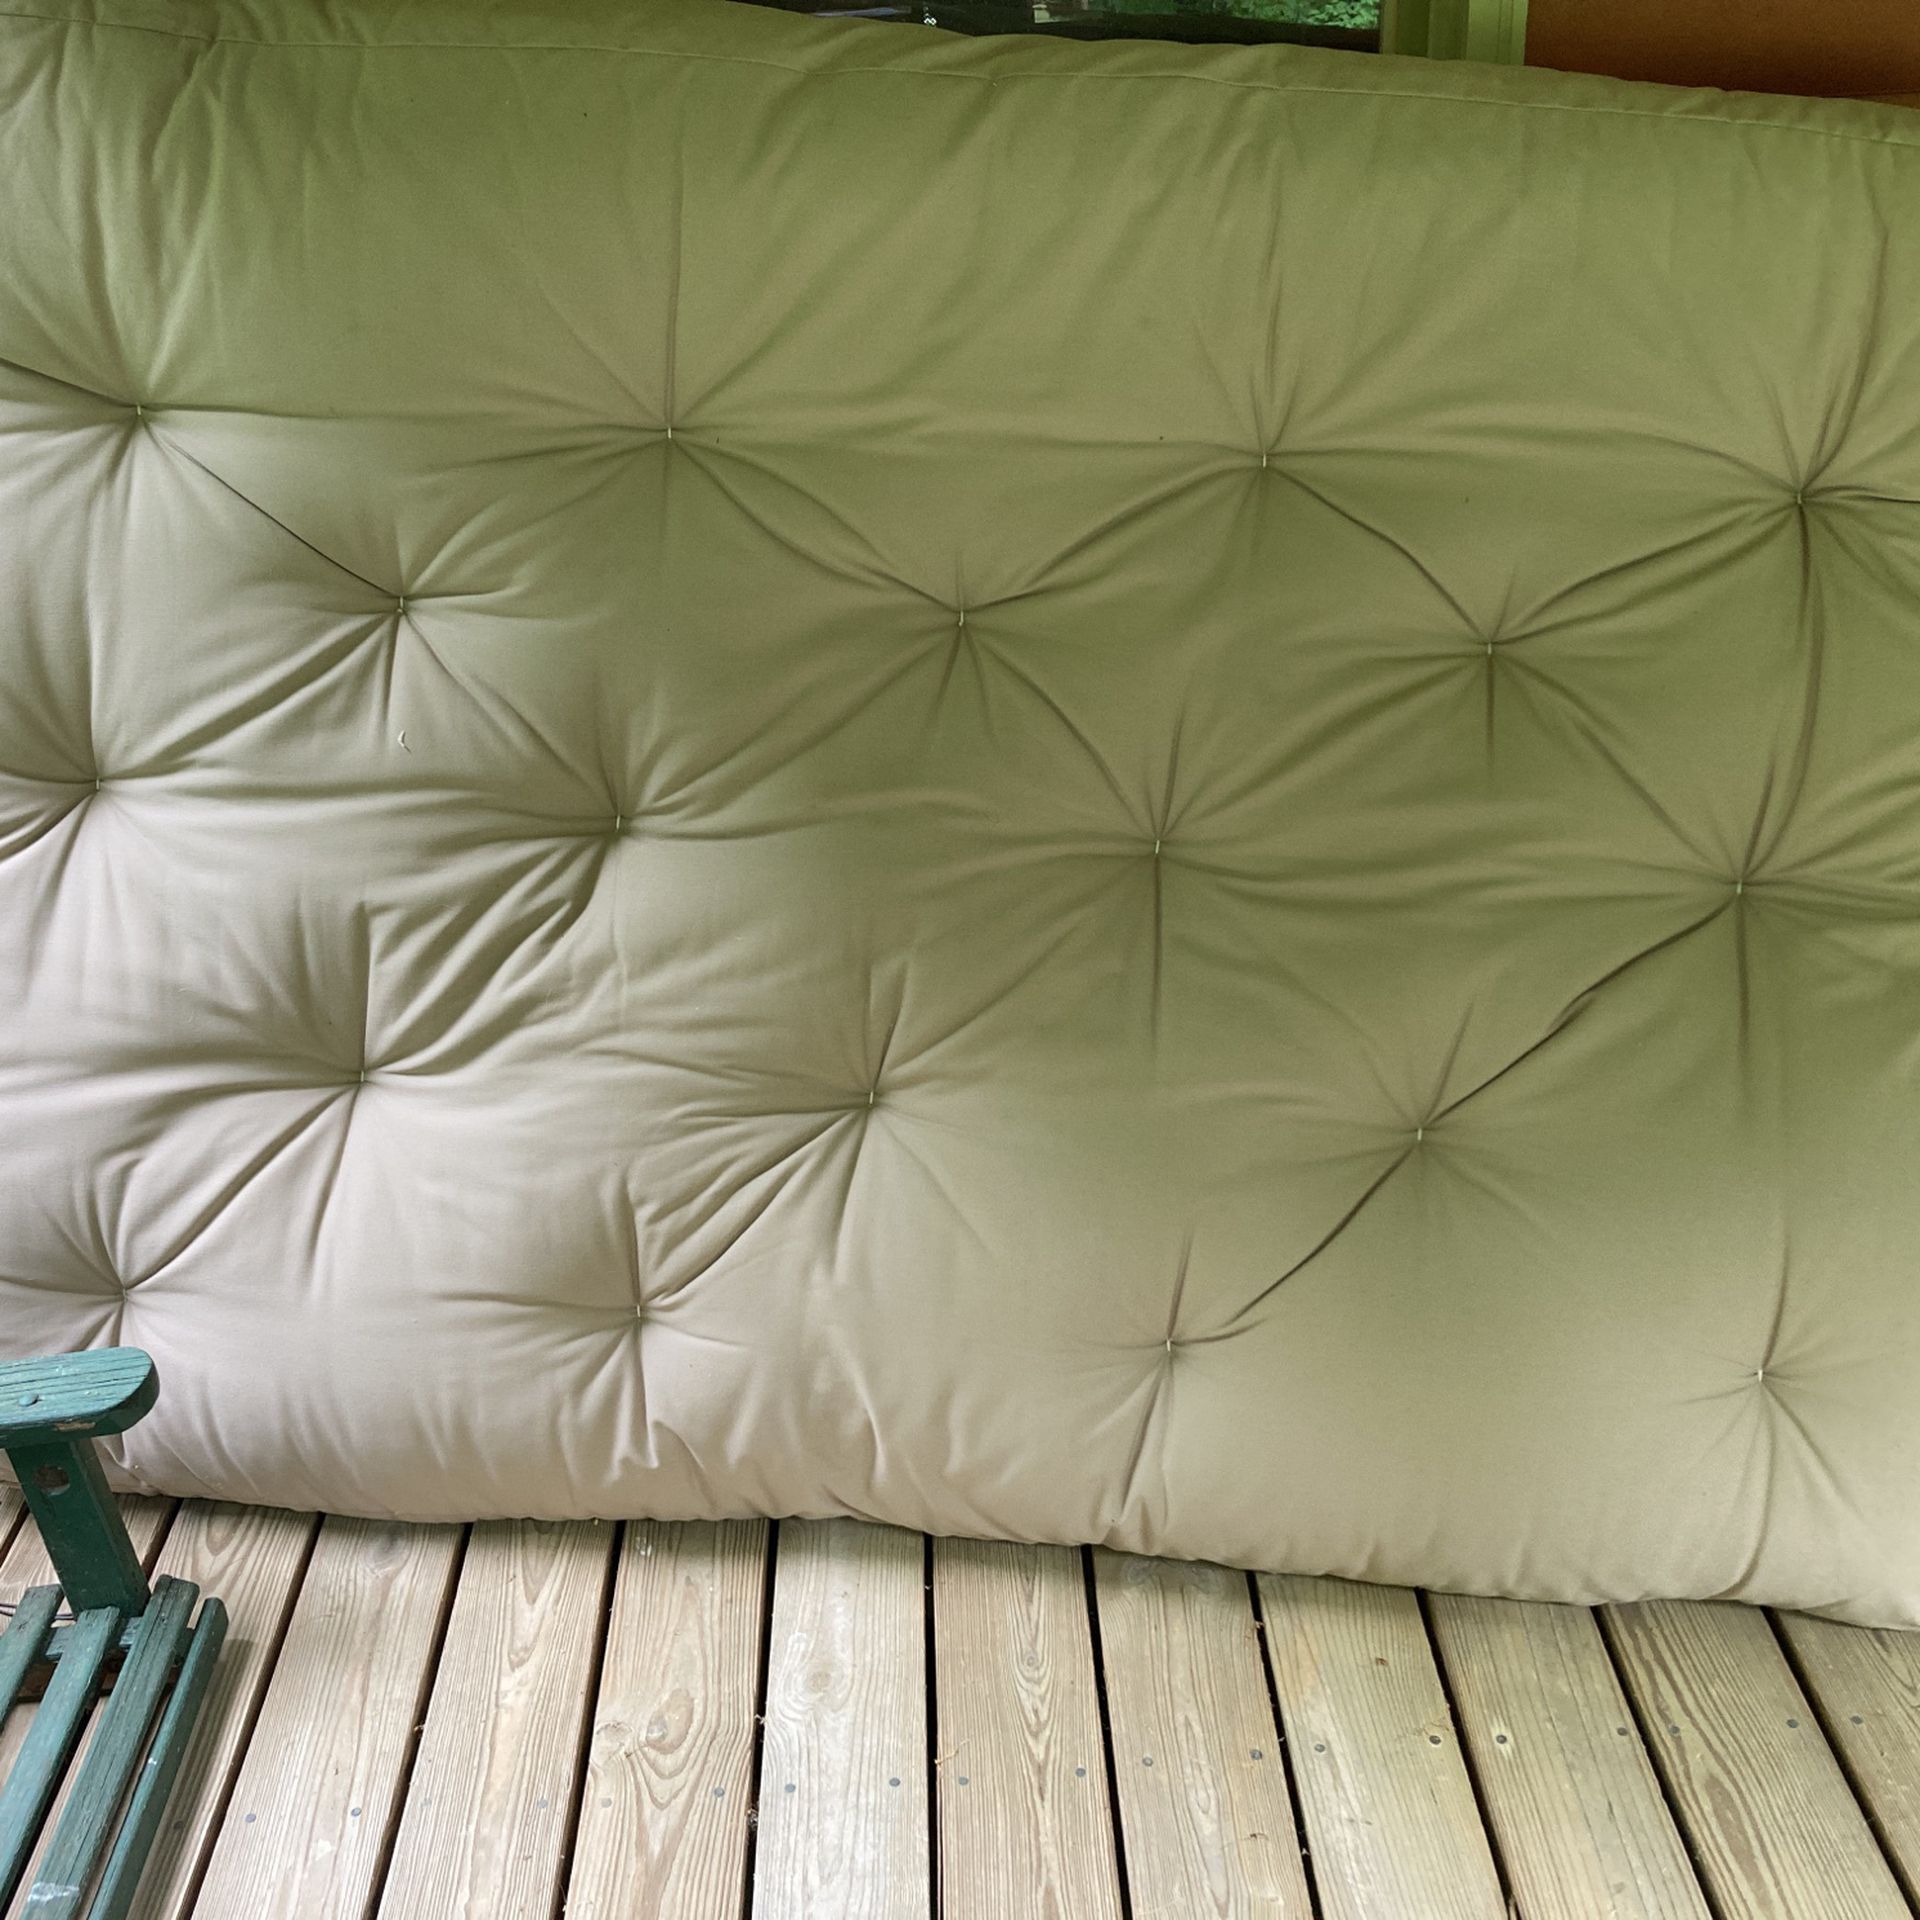 Futon type mattress.